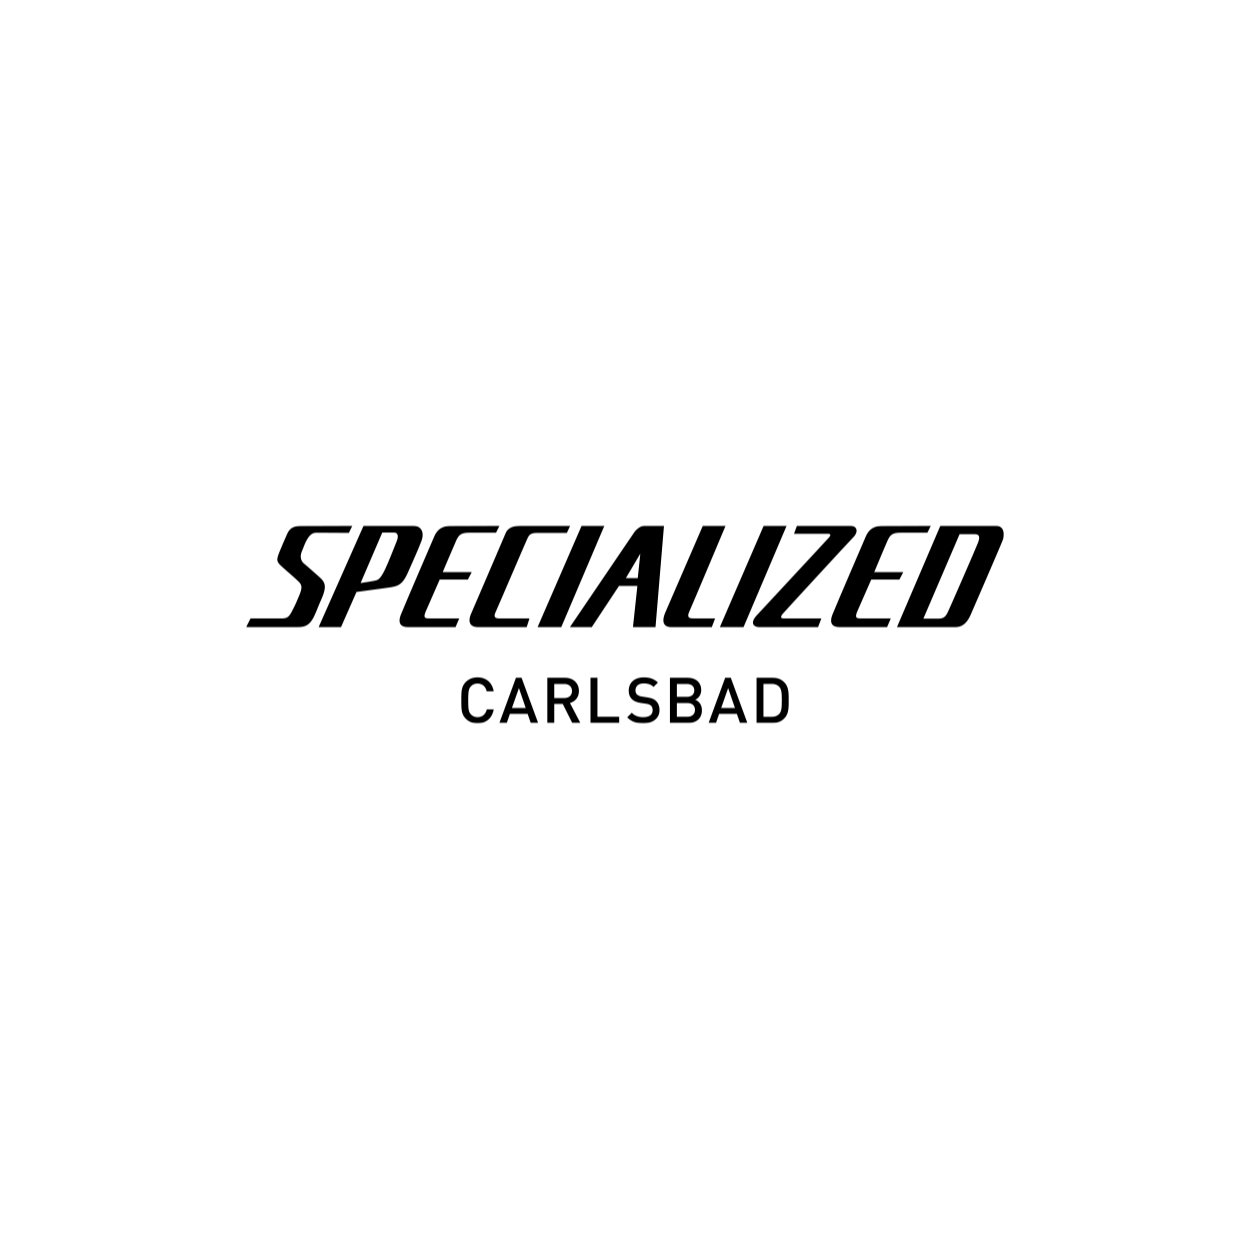 Specialized Carlsbad - Carlsbad, CA 92009 - (442)208-7969 | ShowMeLocal.com